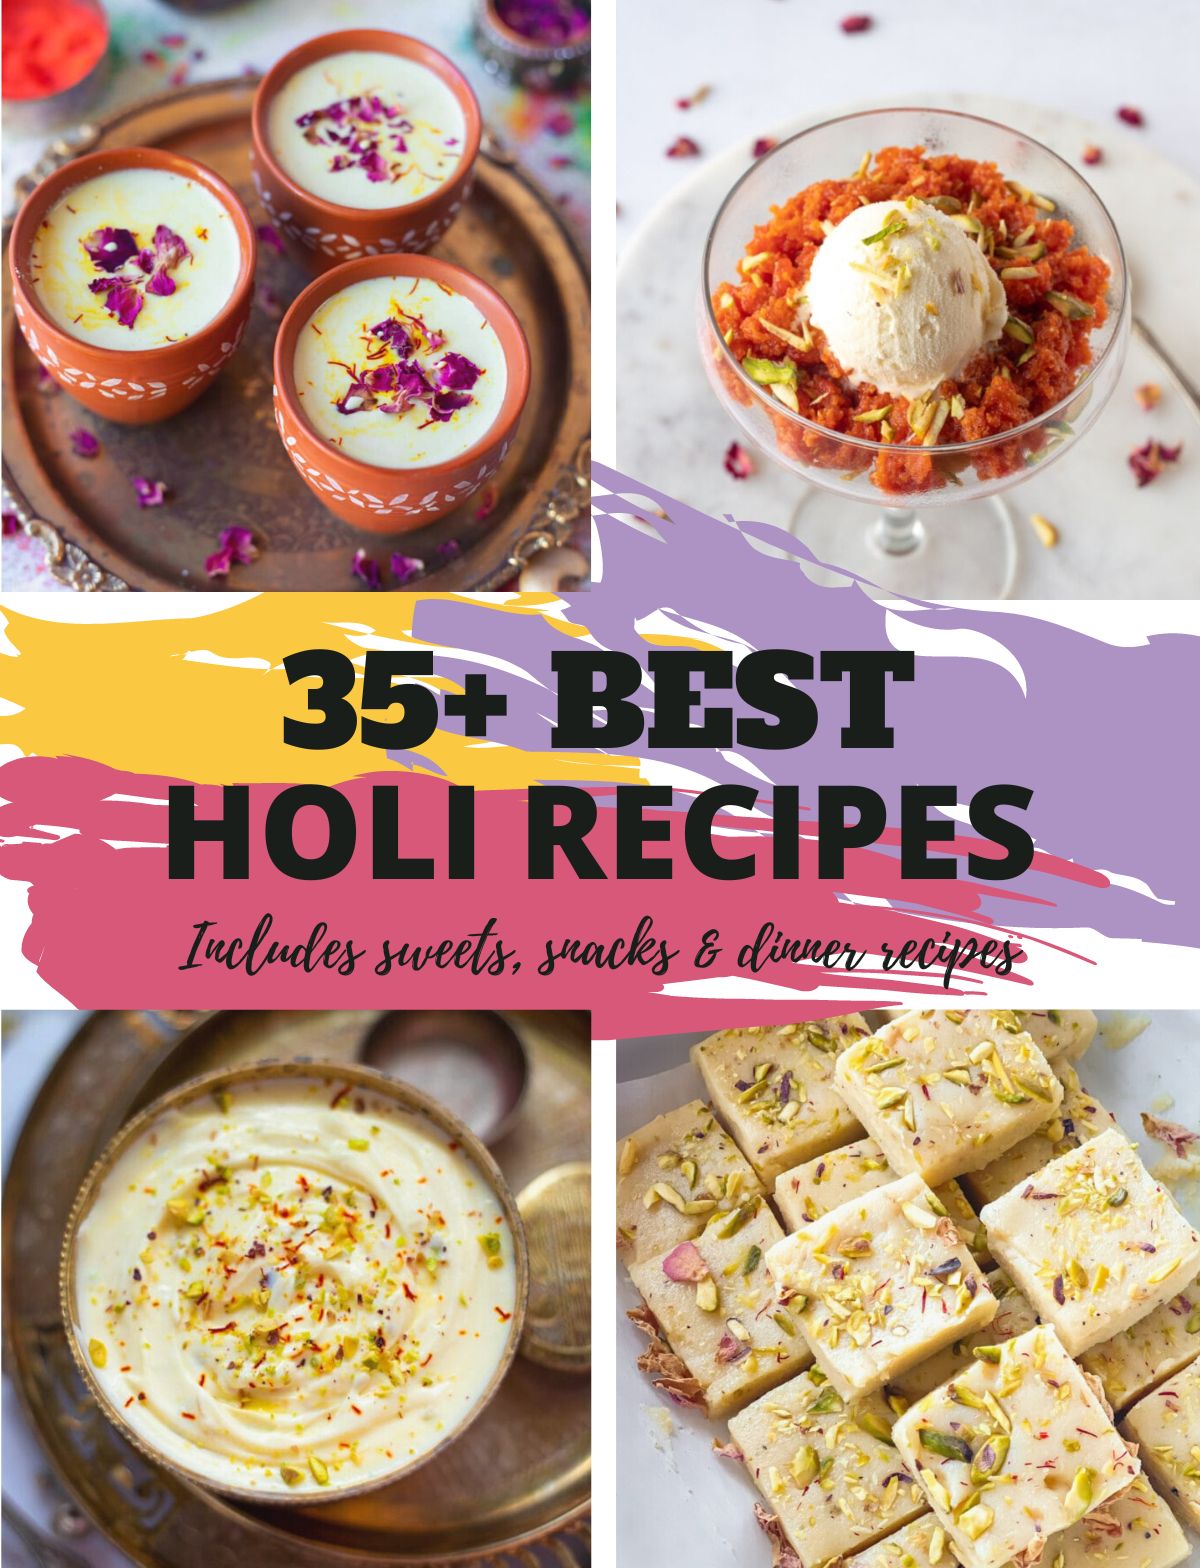 35+ best holi recipes